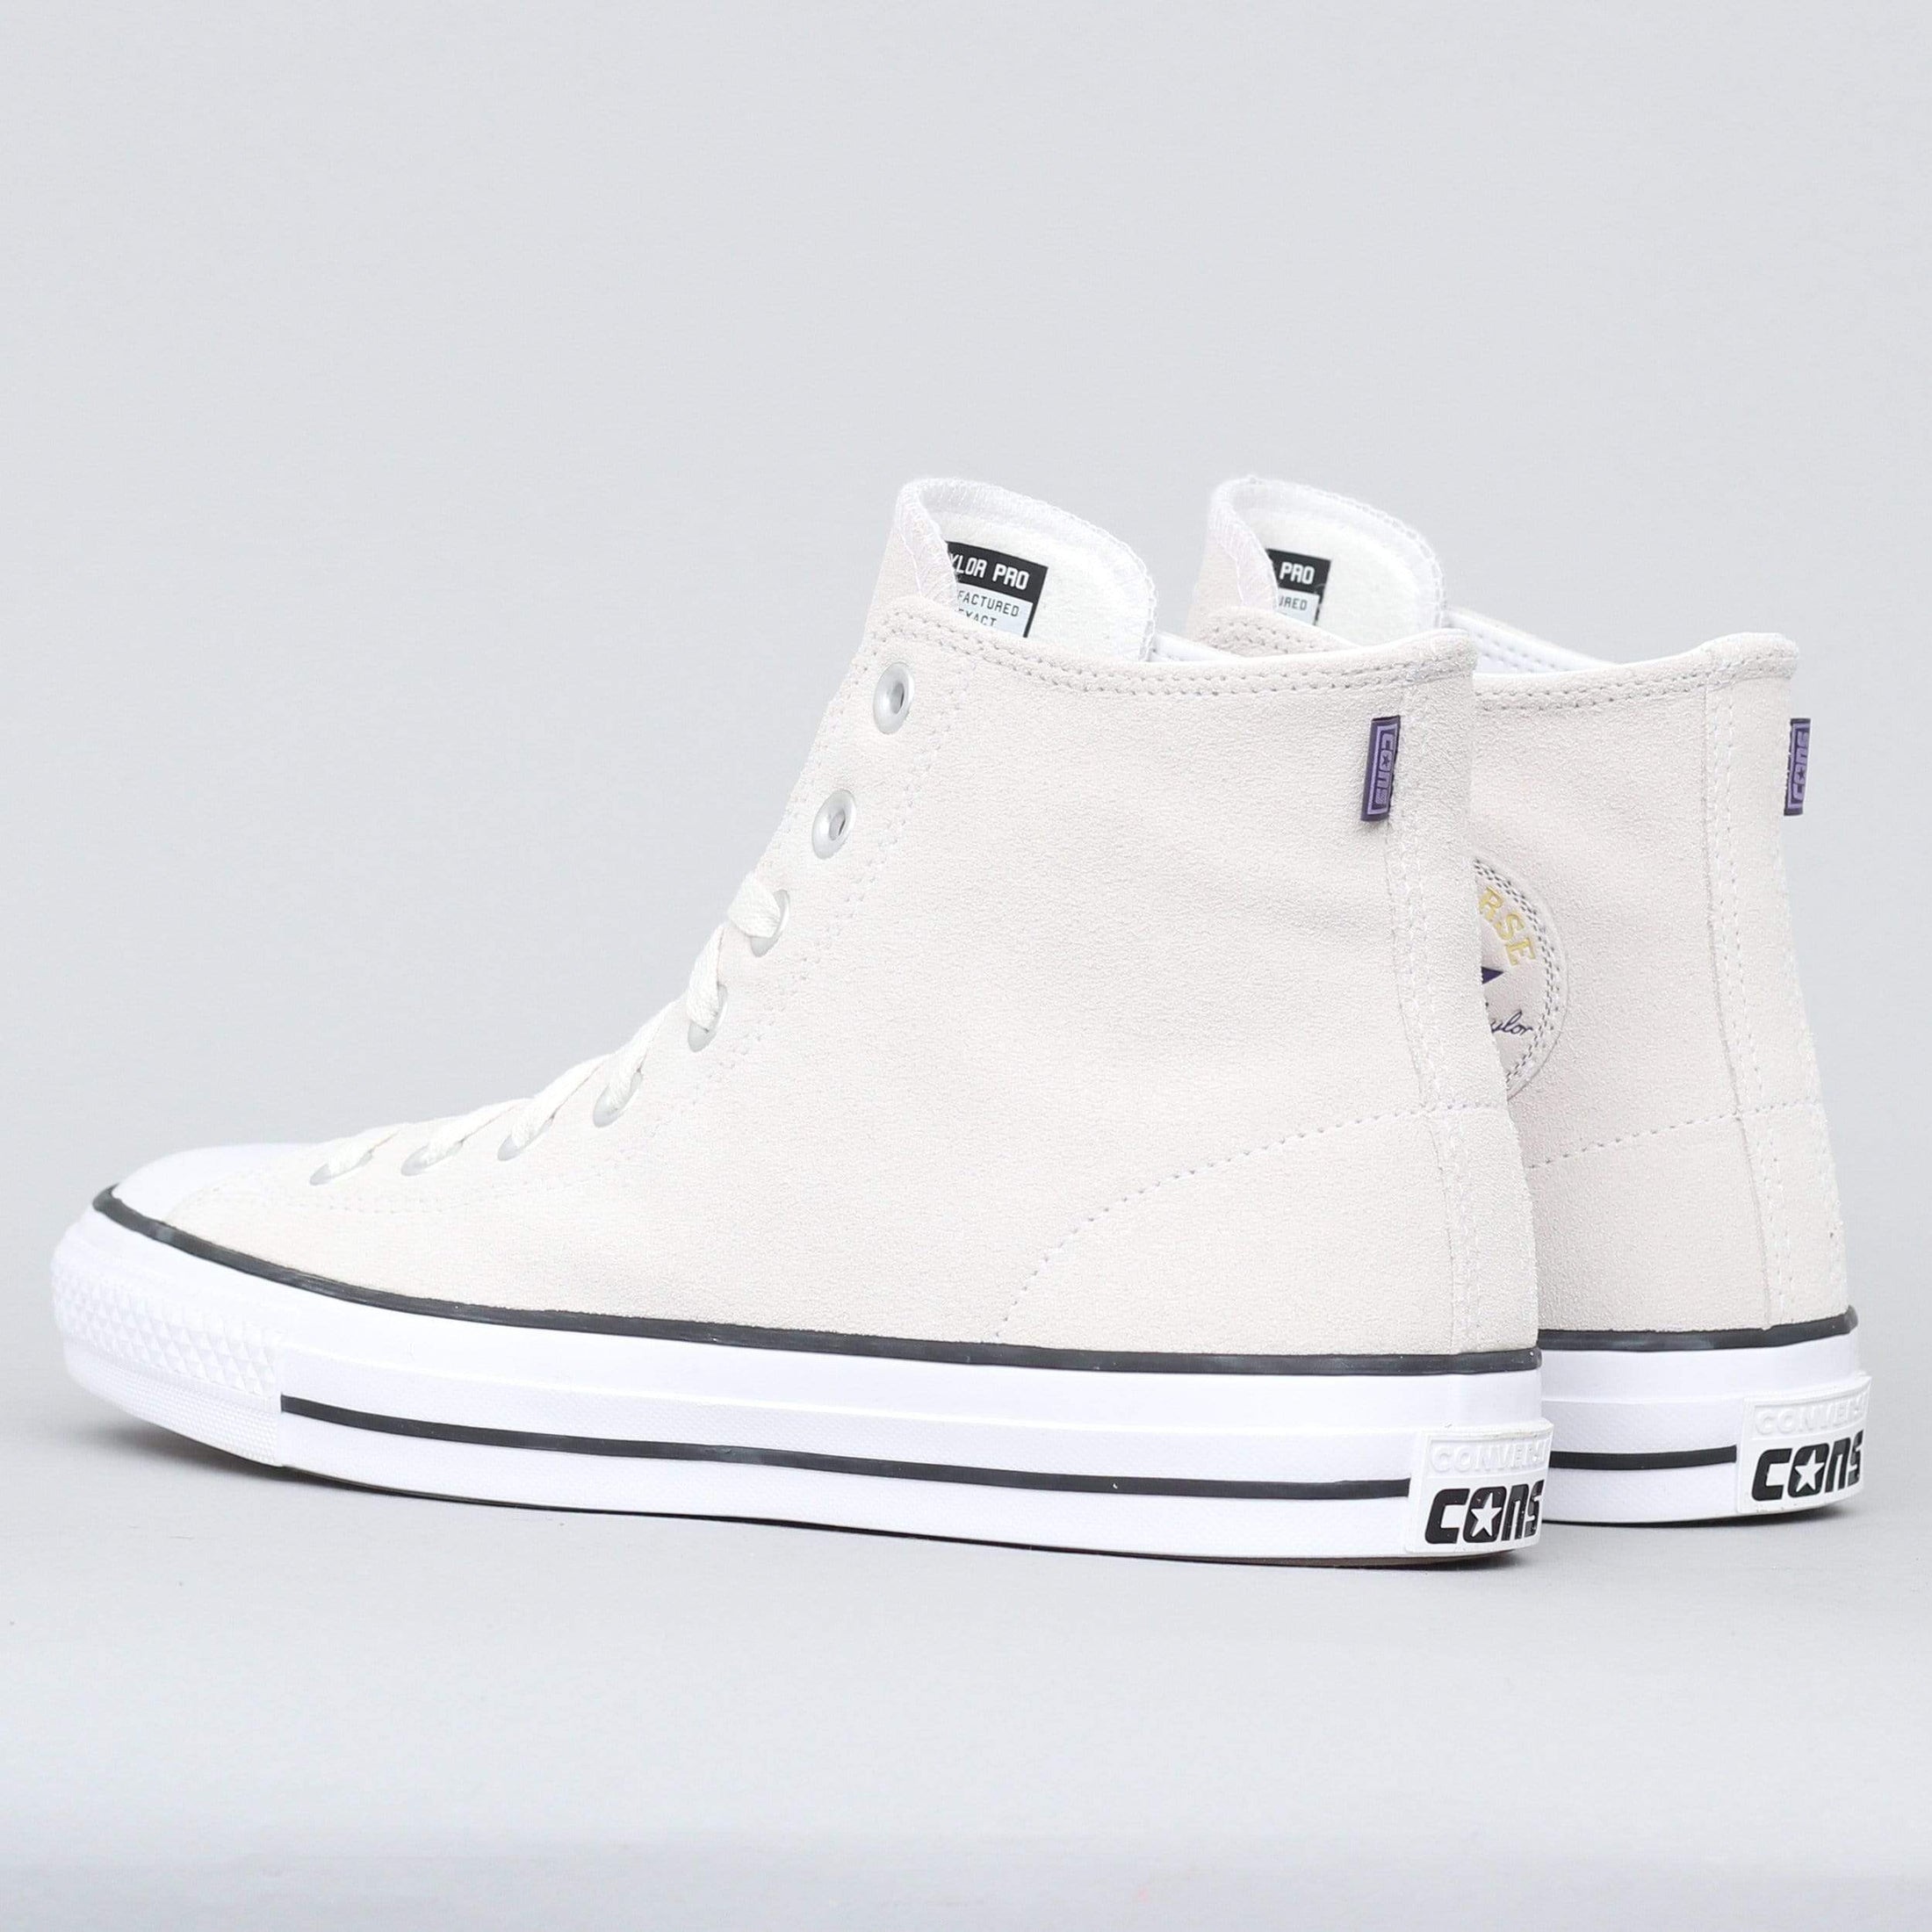 Converse CTAS Pro Hi Shoes Vintage White / White / Black